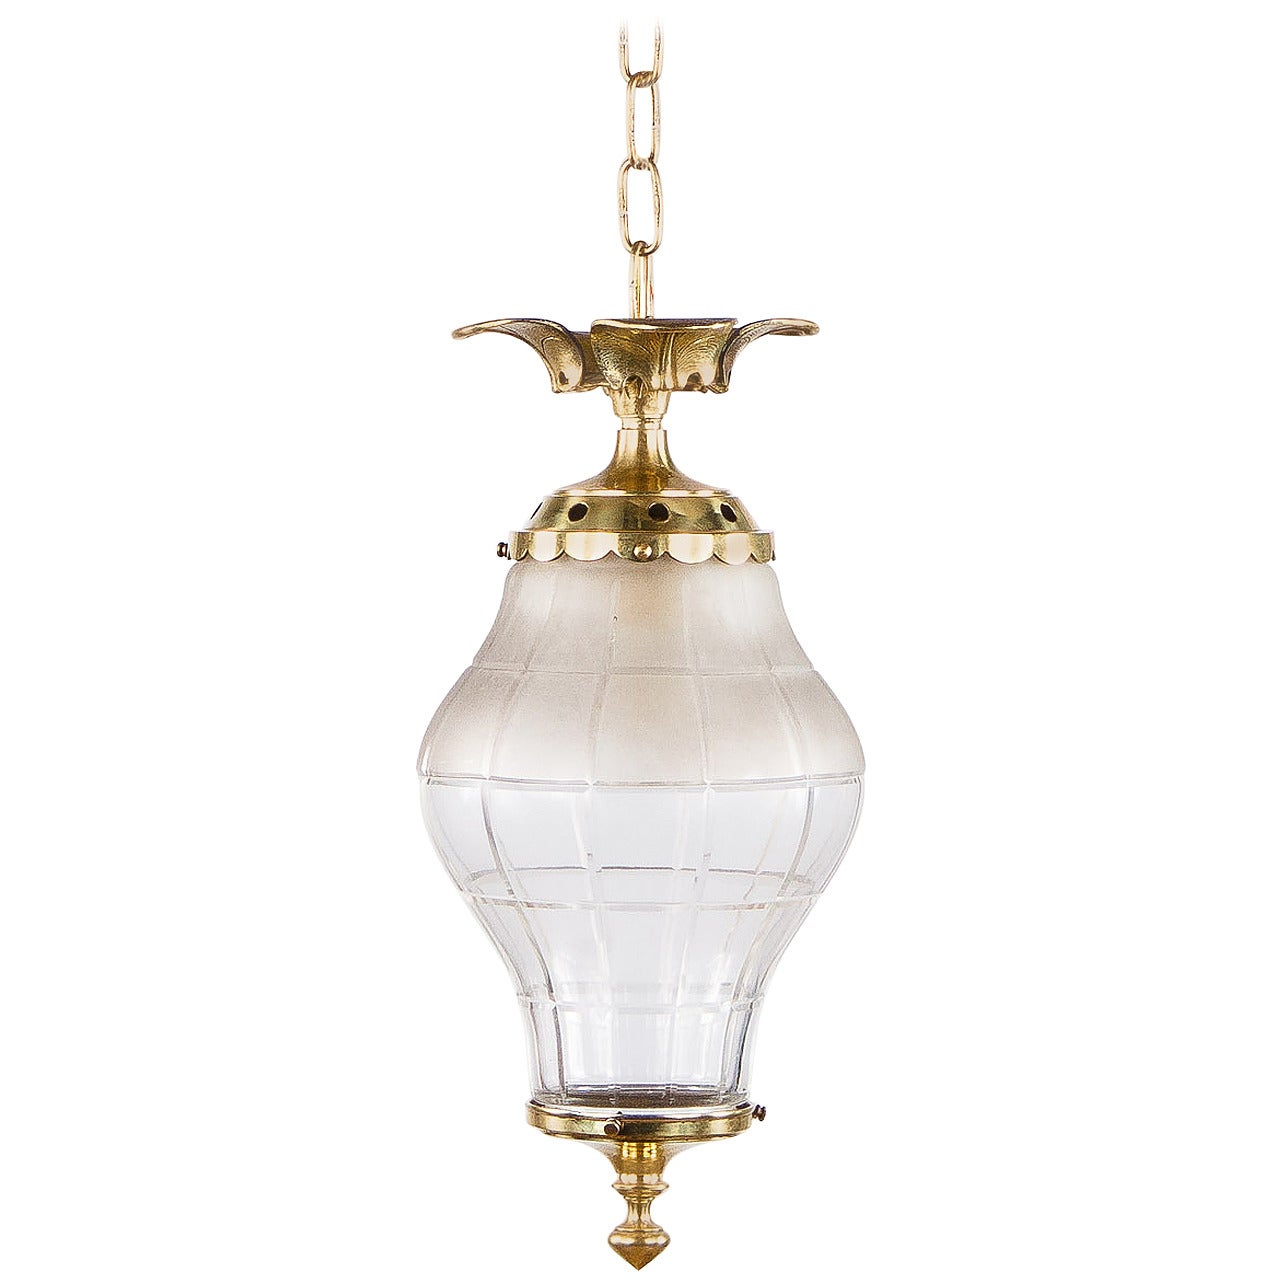 French Art Nouveau Glass and Brass Lantern, 1900s